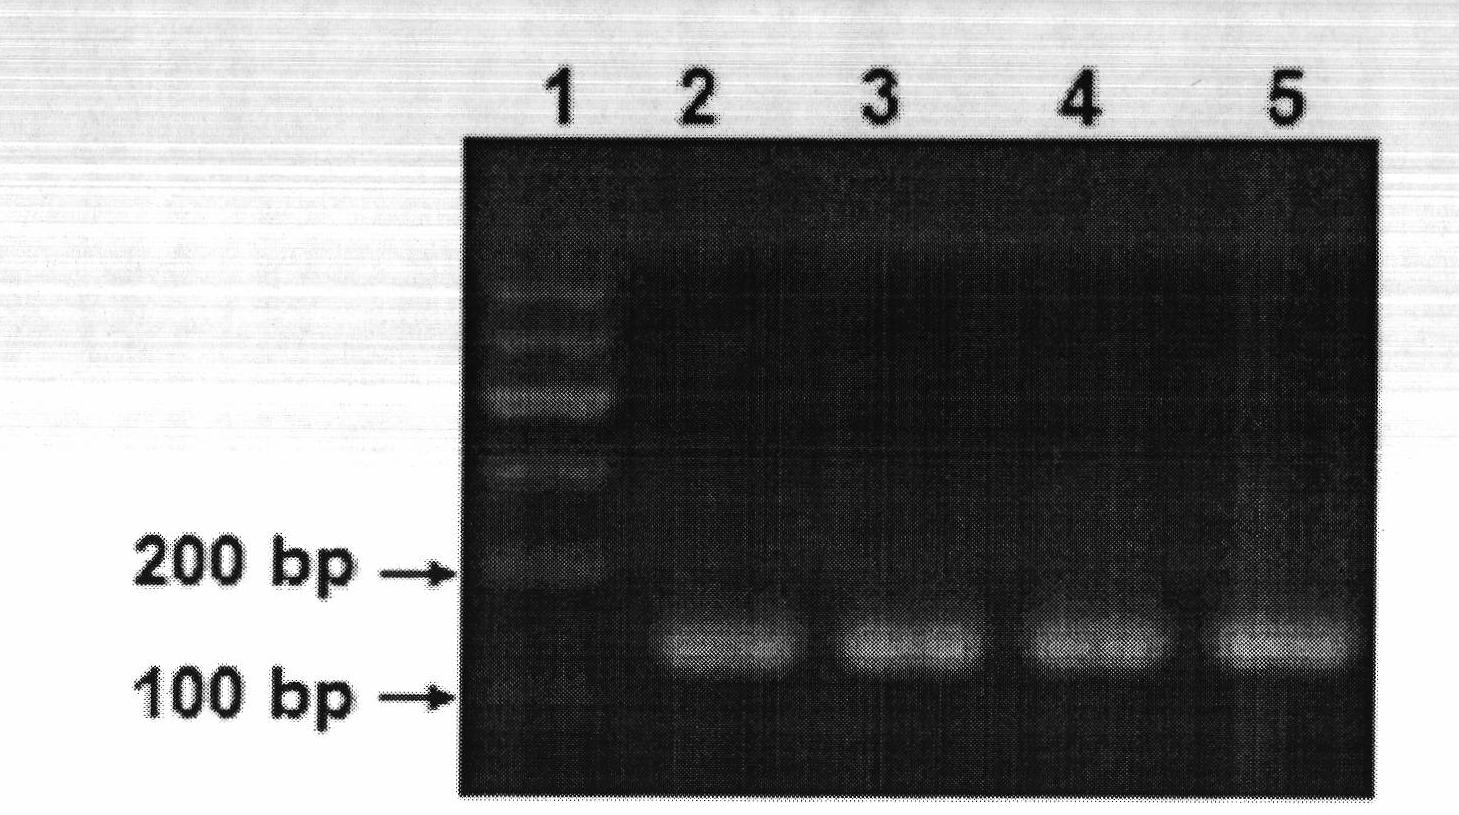 Haemophilus parasuis real-time fluorescent quantitative PCR (polymerase chain reaction) detection method